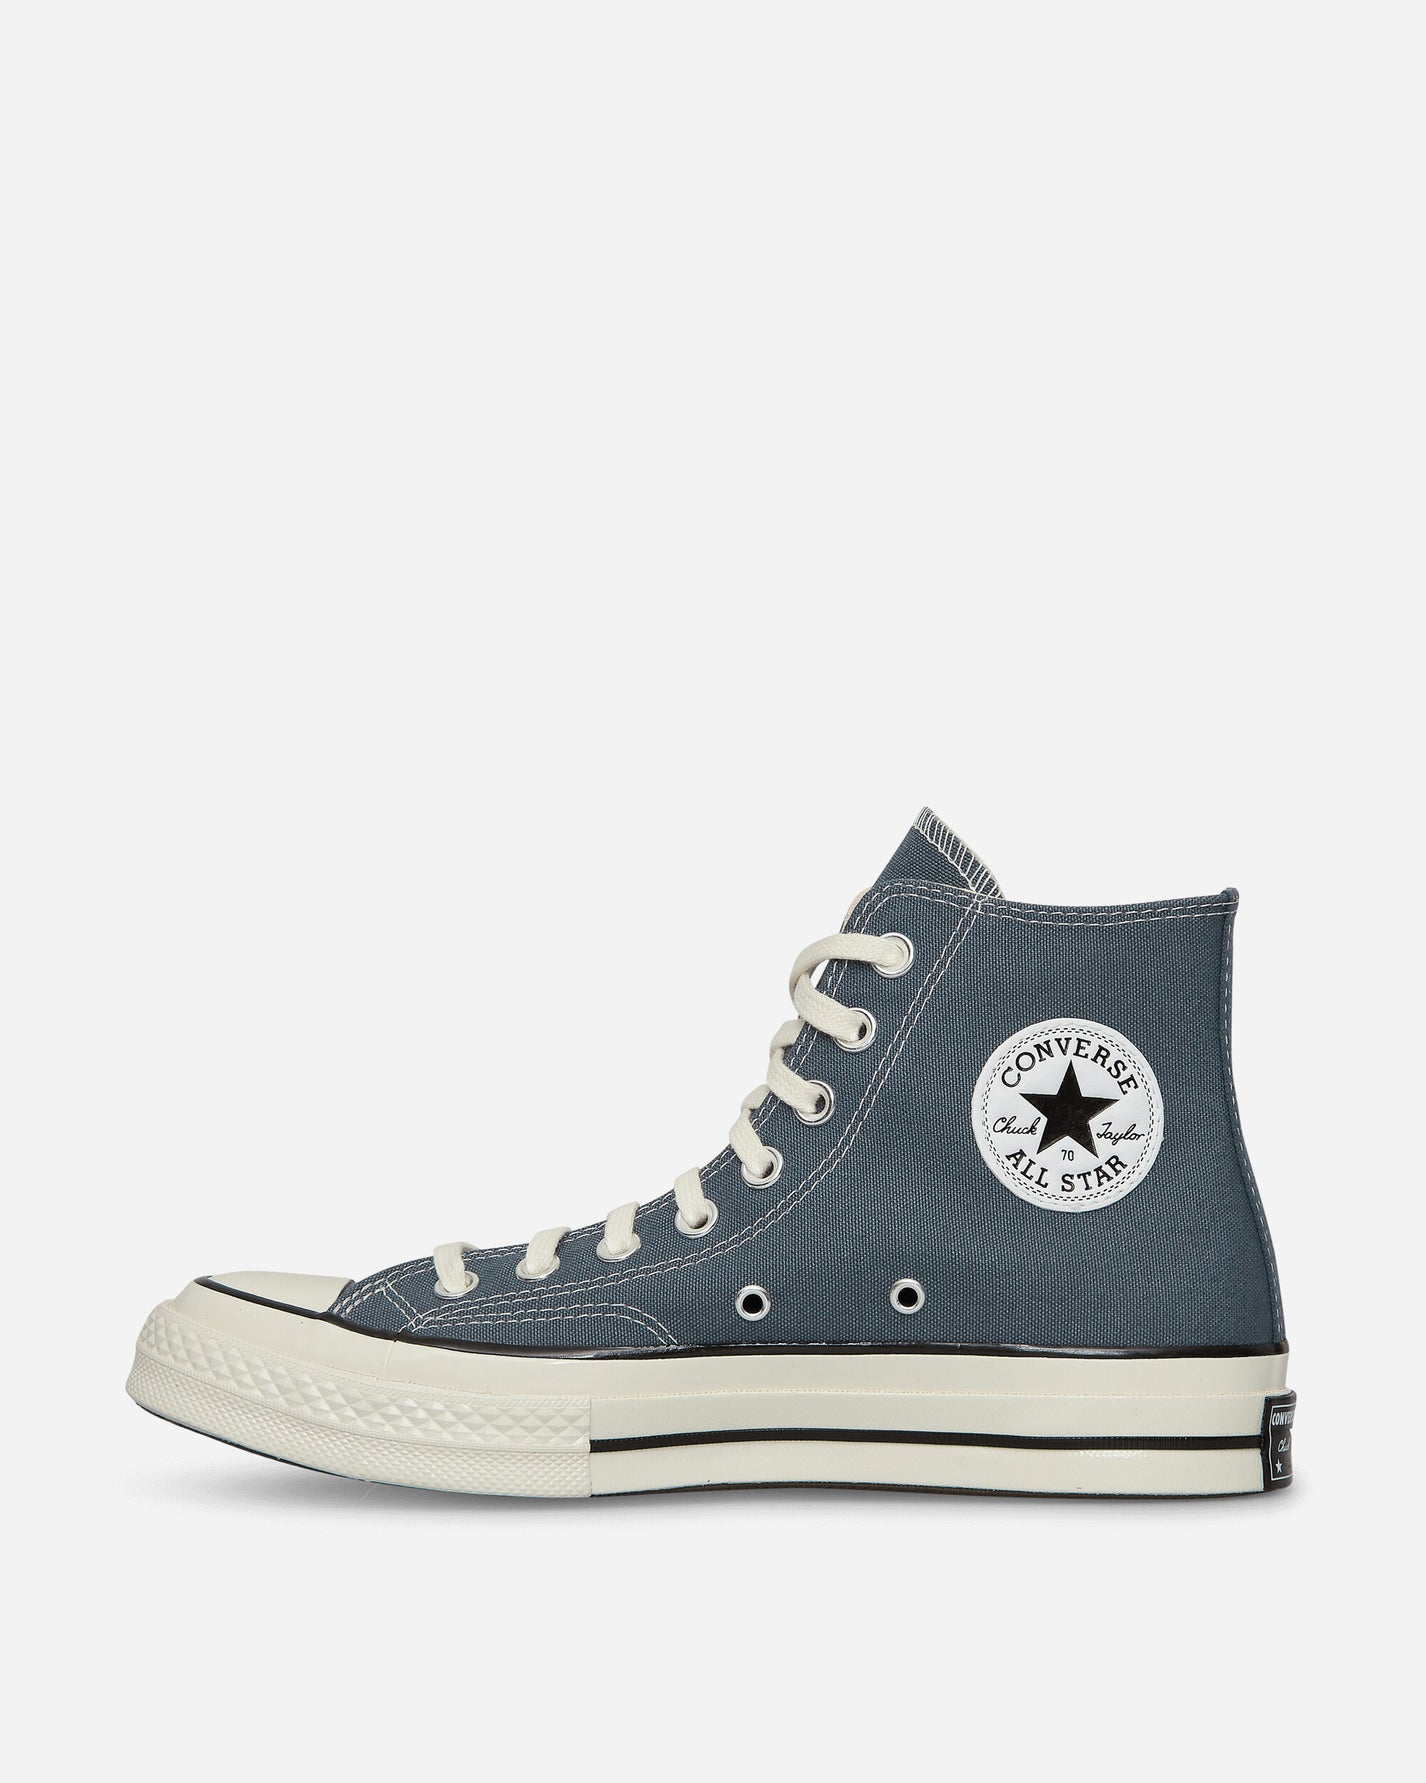 Converse Chuck 70 Newtral Teal/Egret/Black Sneakers High A08617C